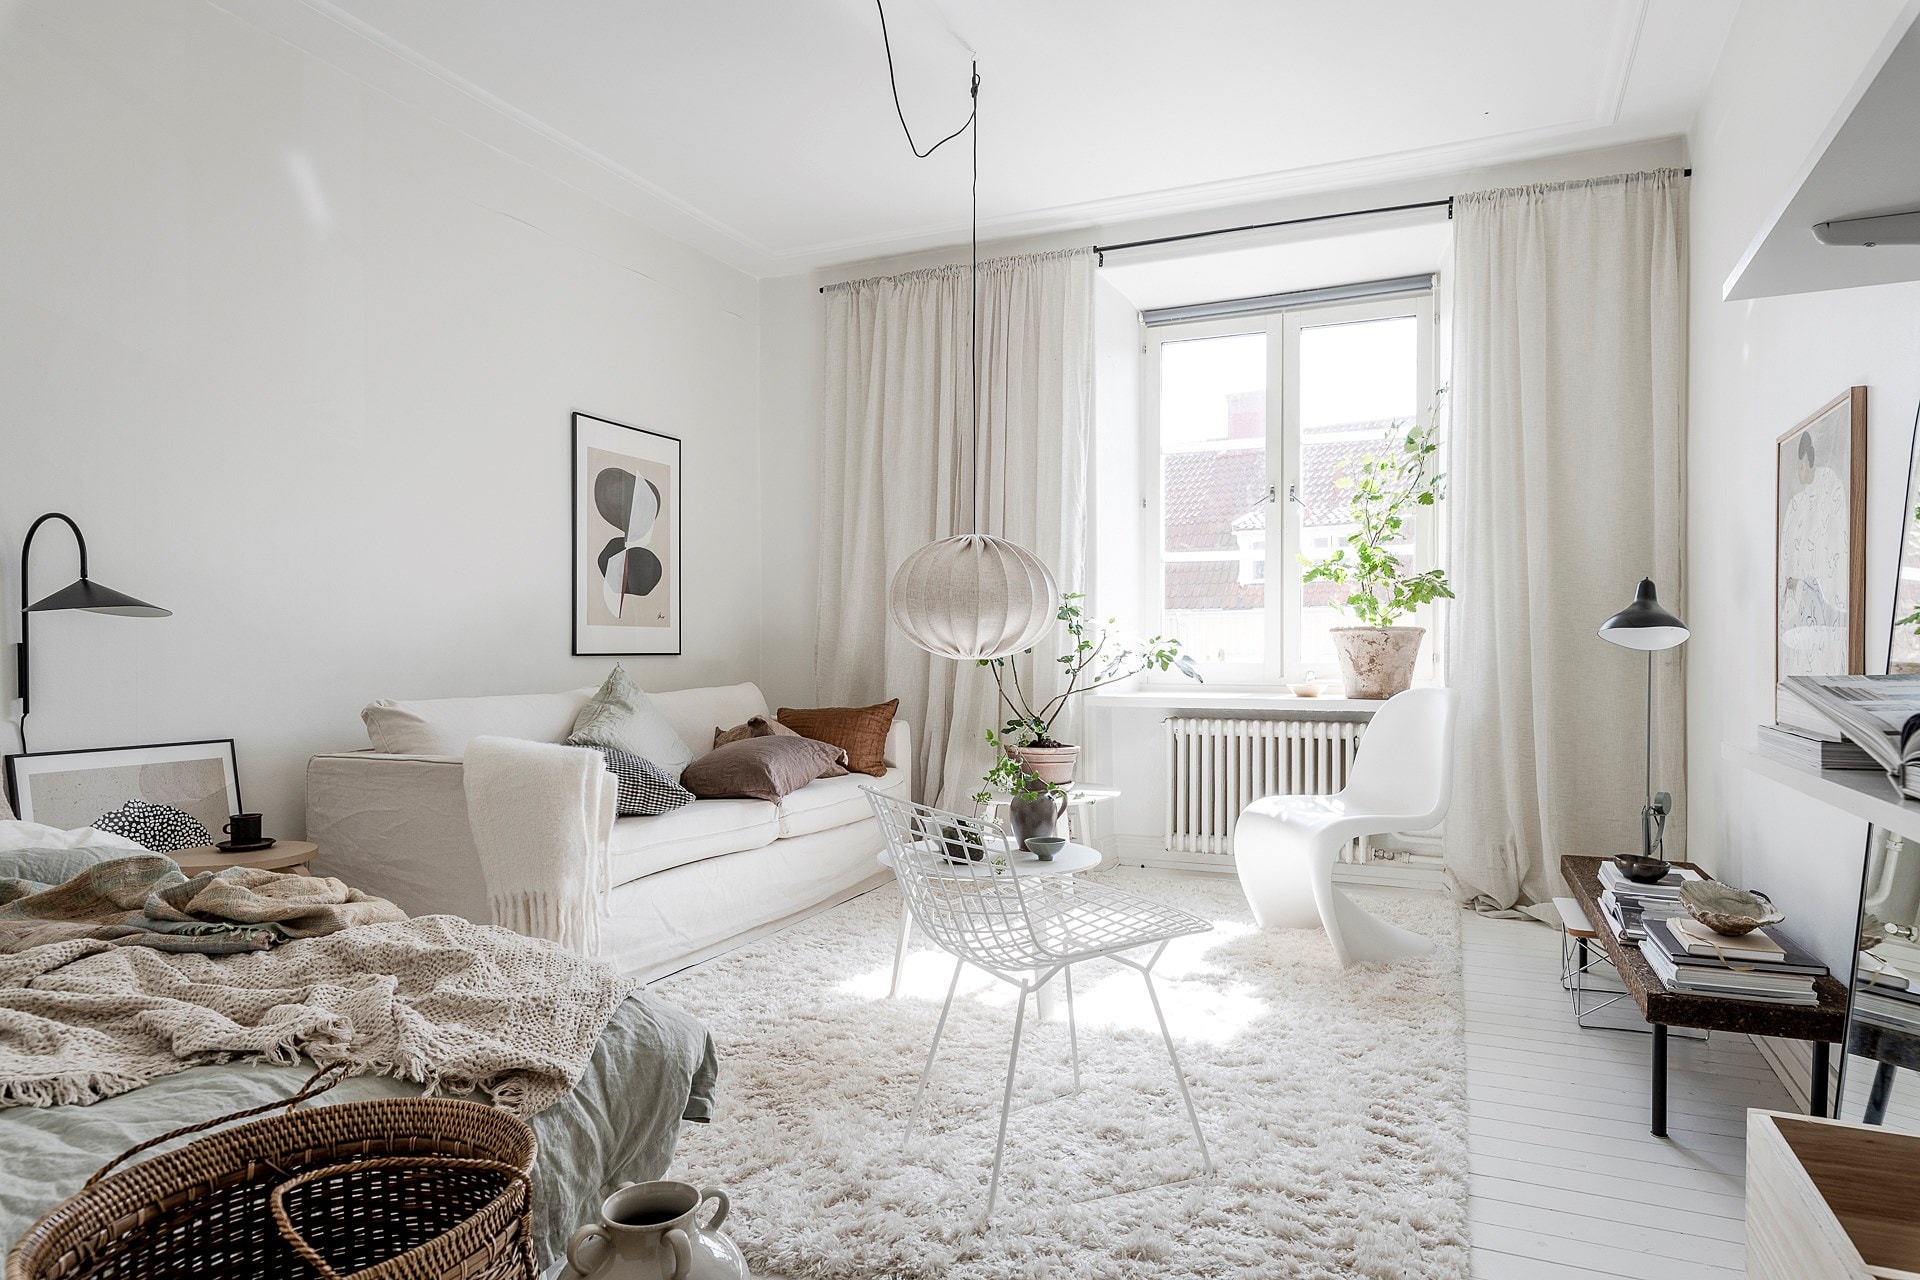 white sofa apartment sized furniture design